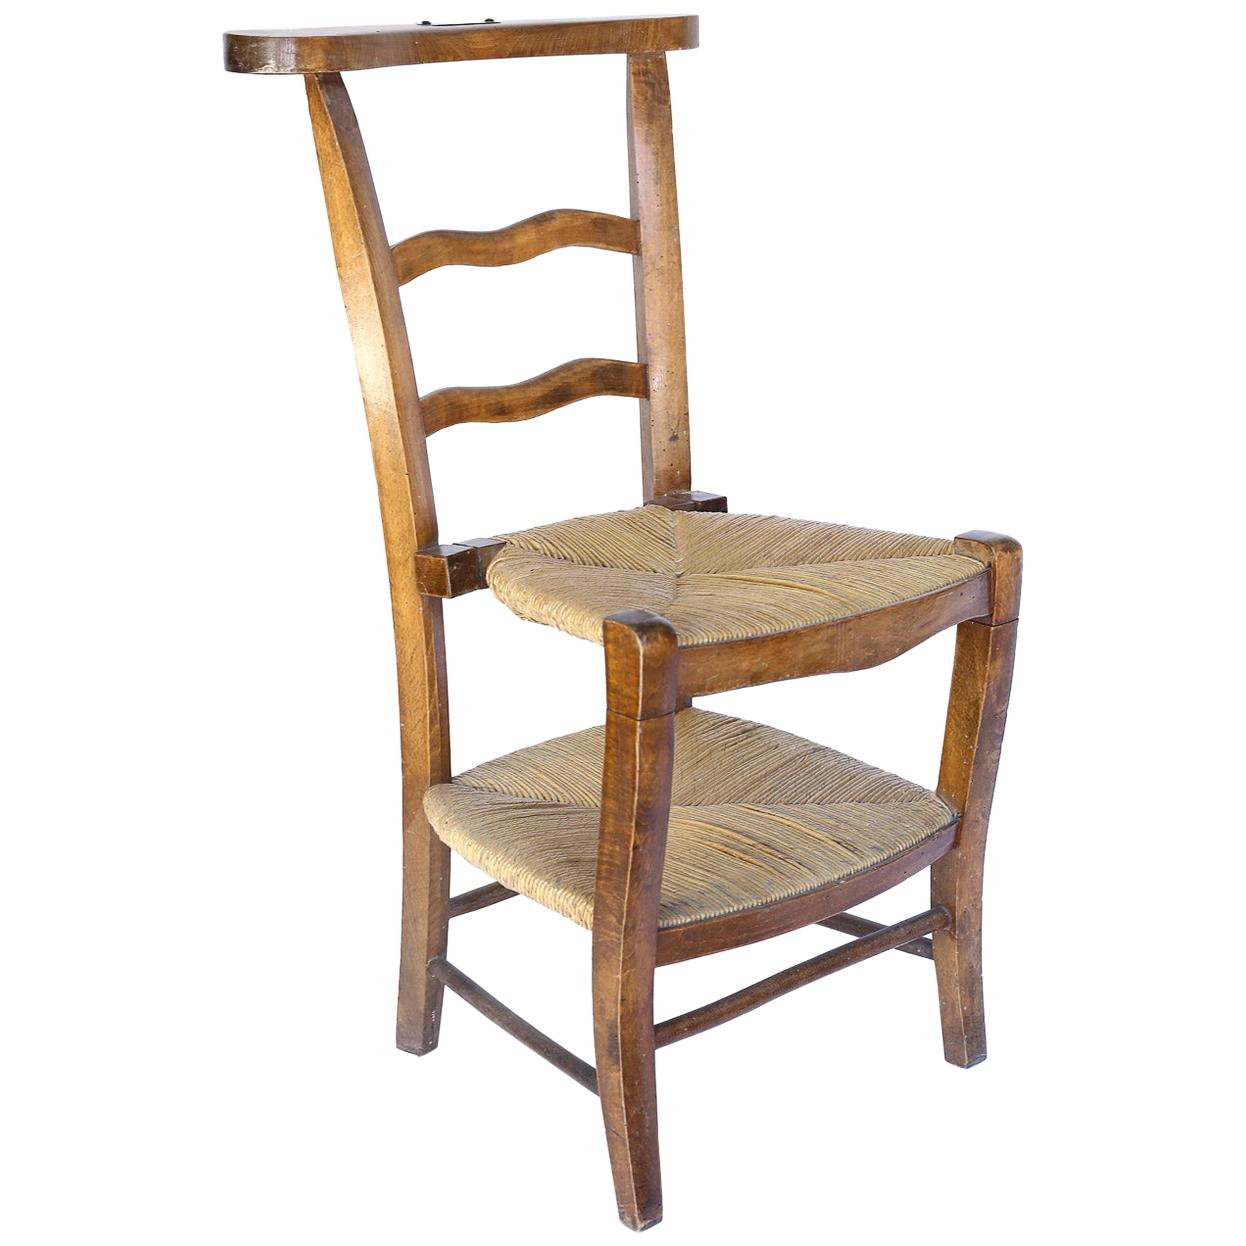 Antique French Prie Dieu, Prayer Chair